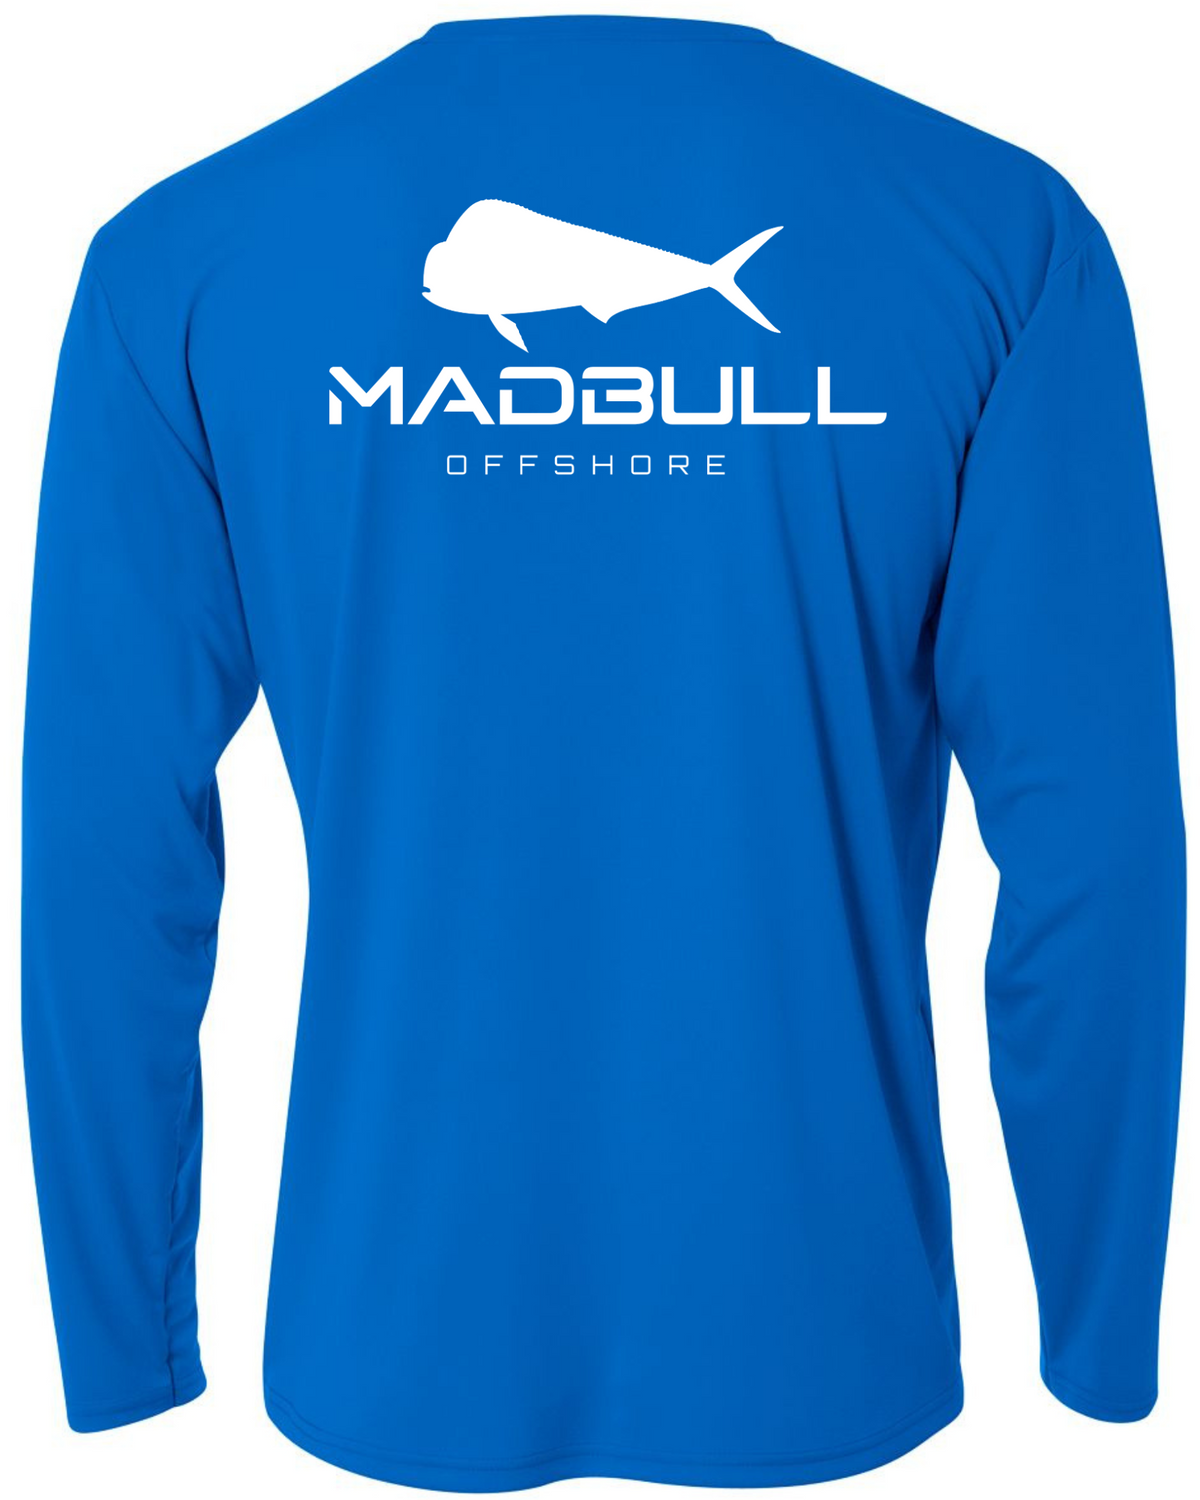 MadBull Florida Anglers Performance Fishing Shirt – MadBull Offshore